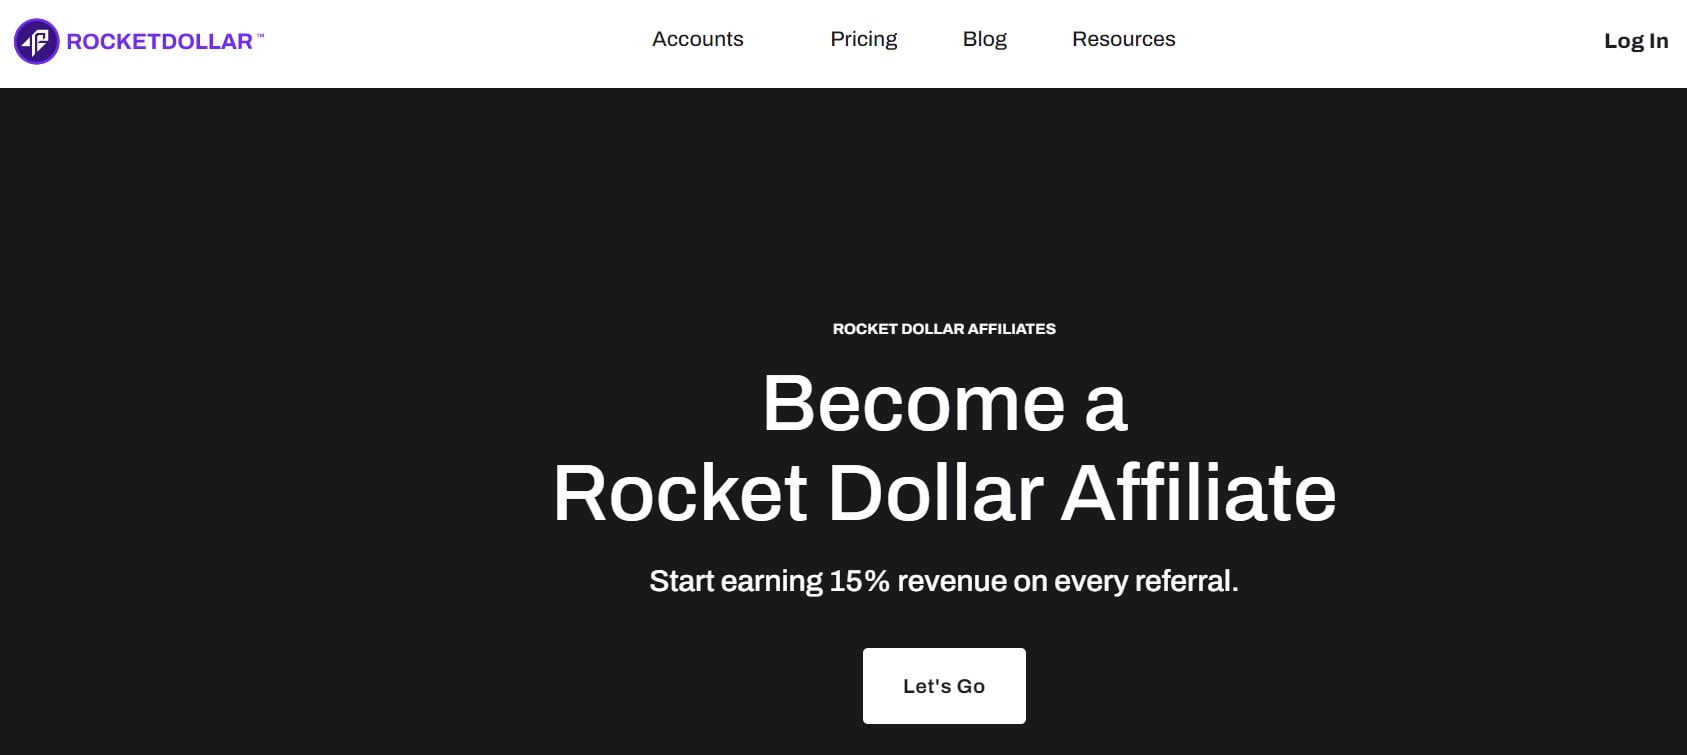 RocketDollar affiliate program